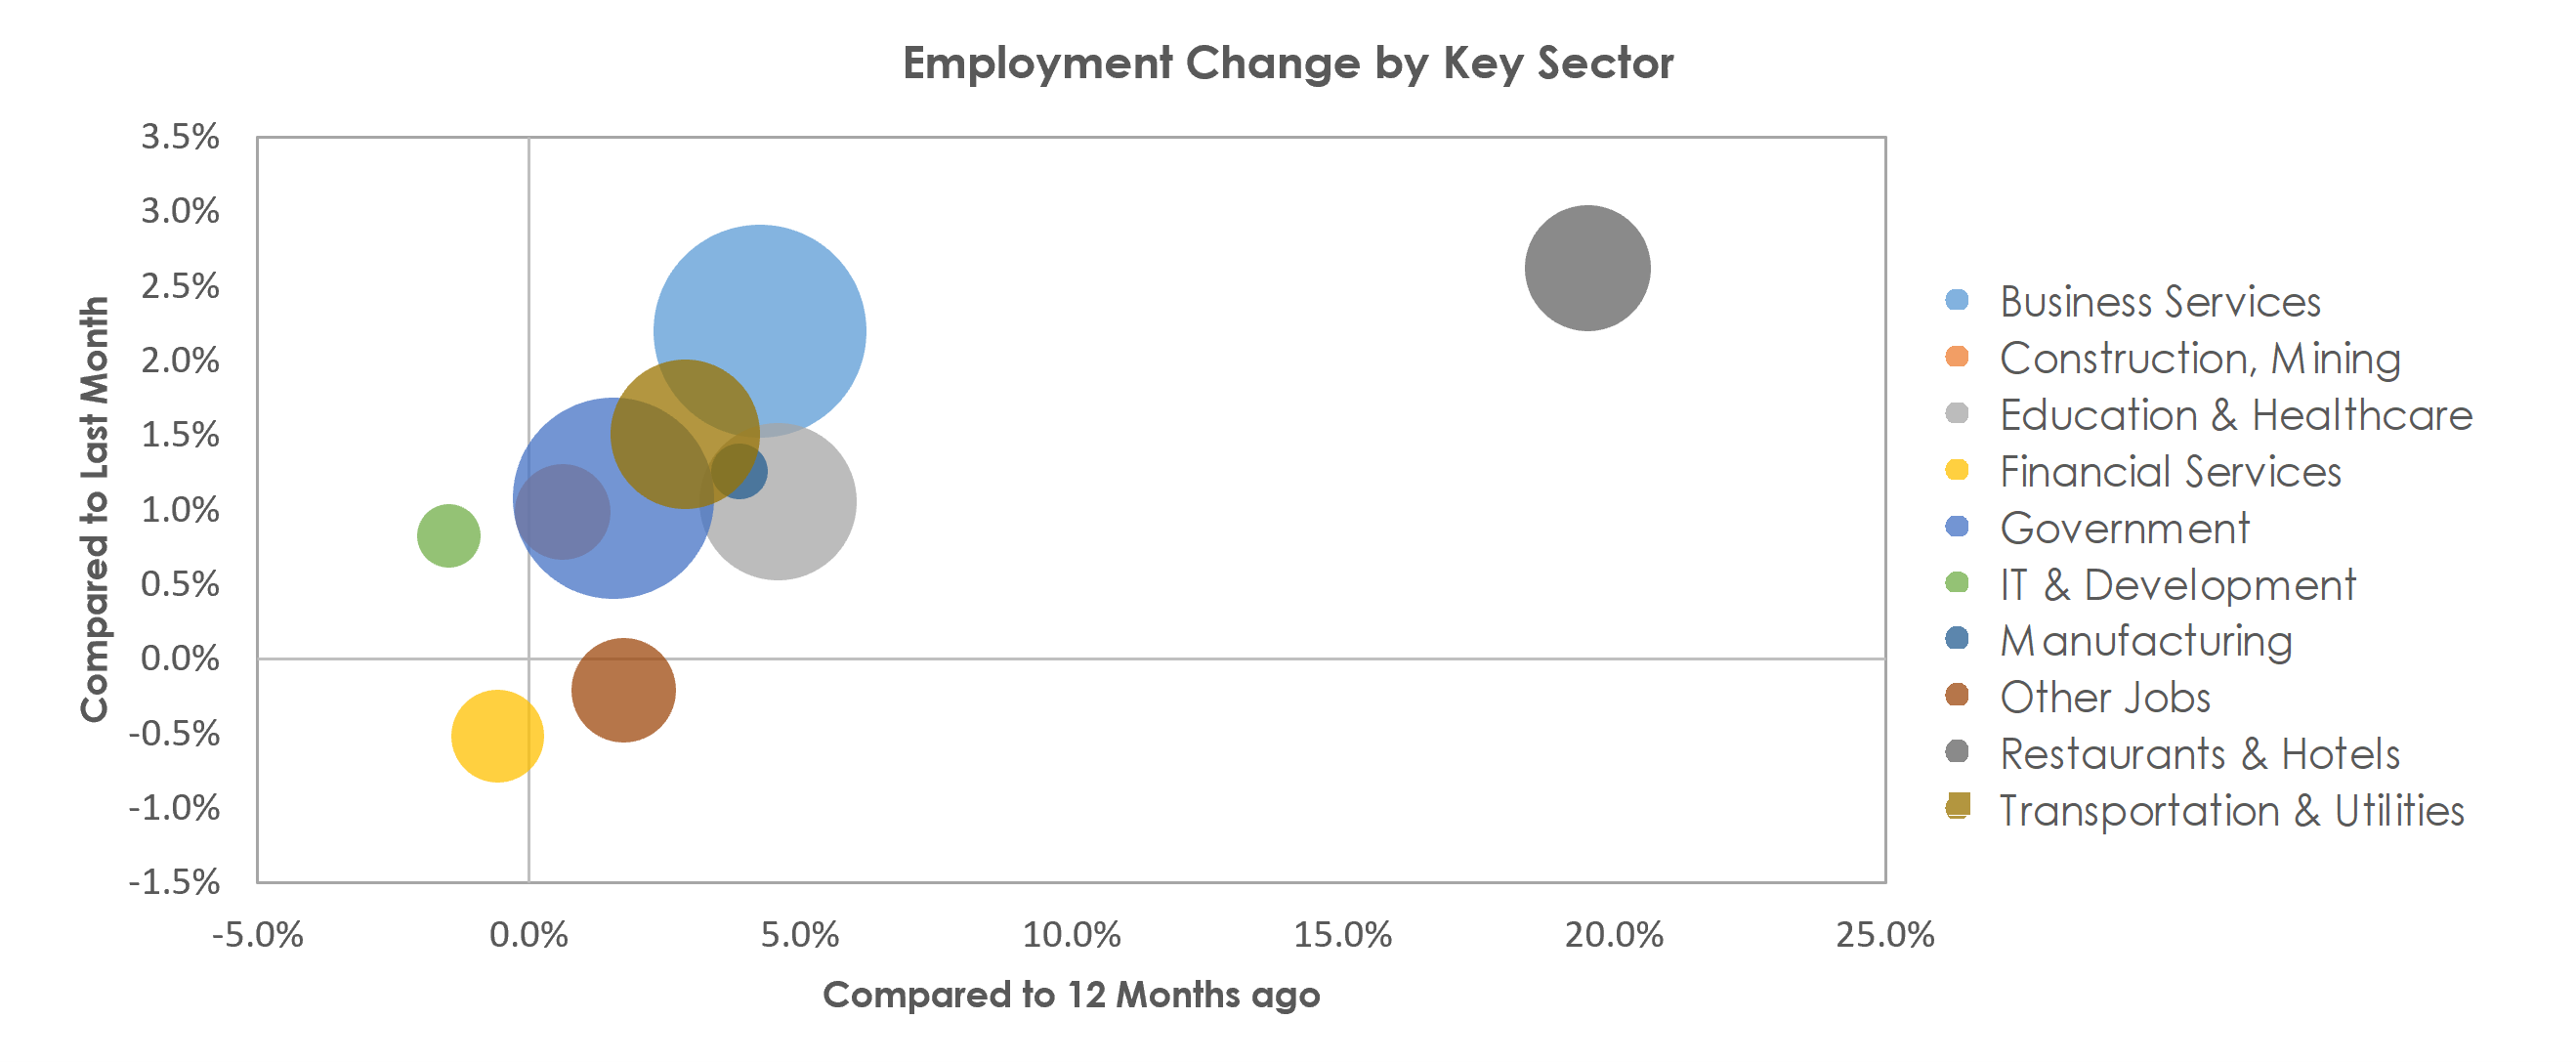 Washington-Arlington-Alexandria, DC-VA-MD-WV Unemployment by Industry October 2021